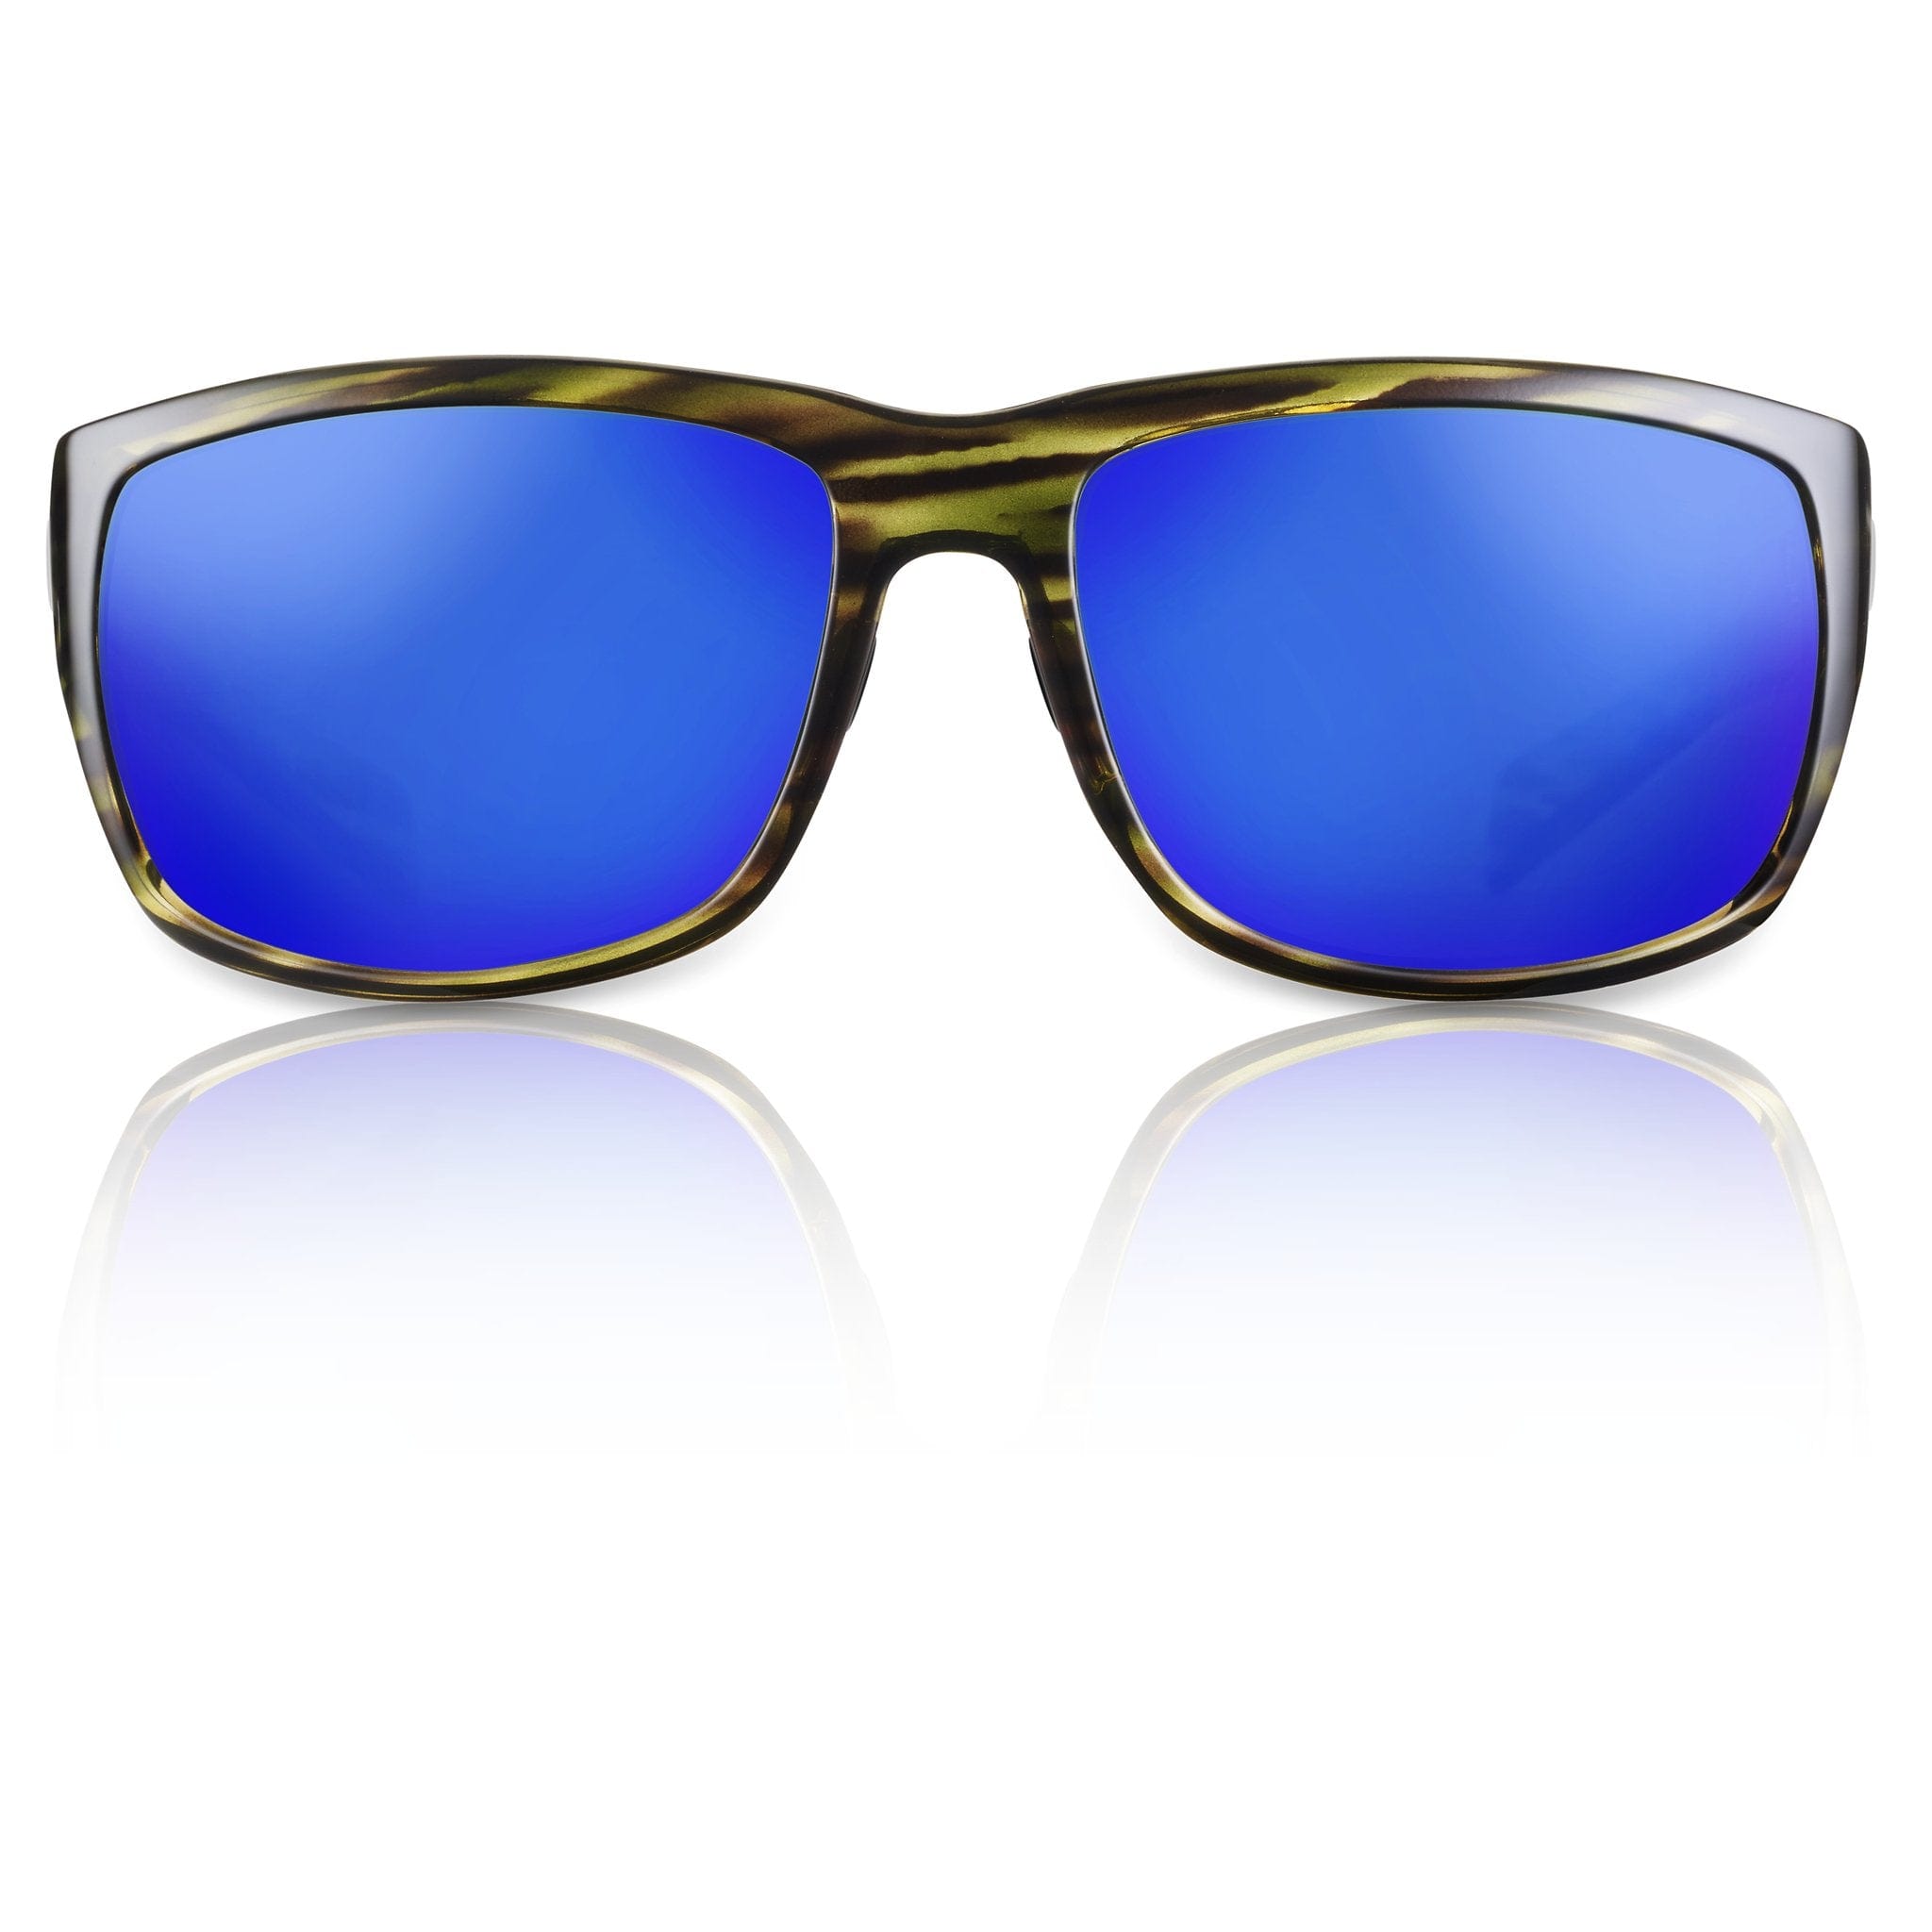 RedFin Amelia Polarized Fishing Sunglasses